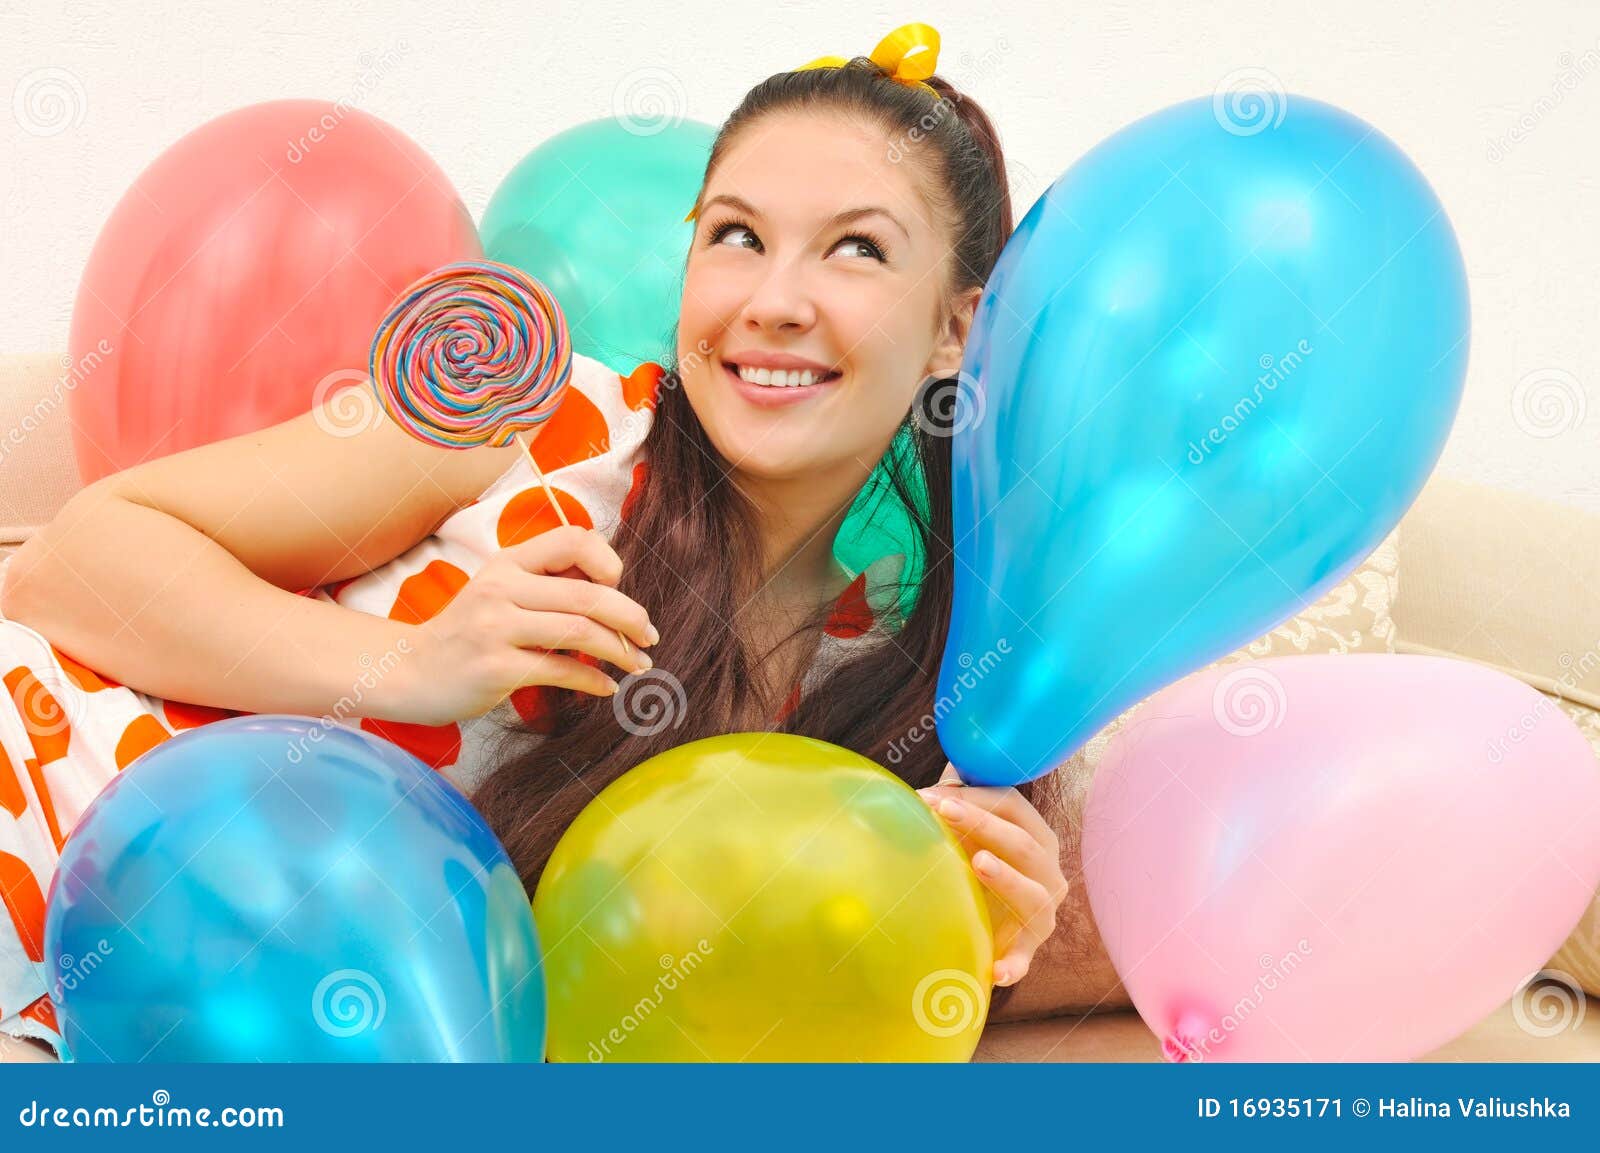 girl with balloons and bonbon